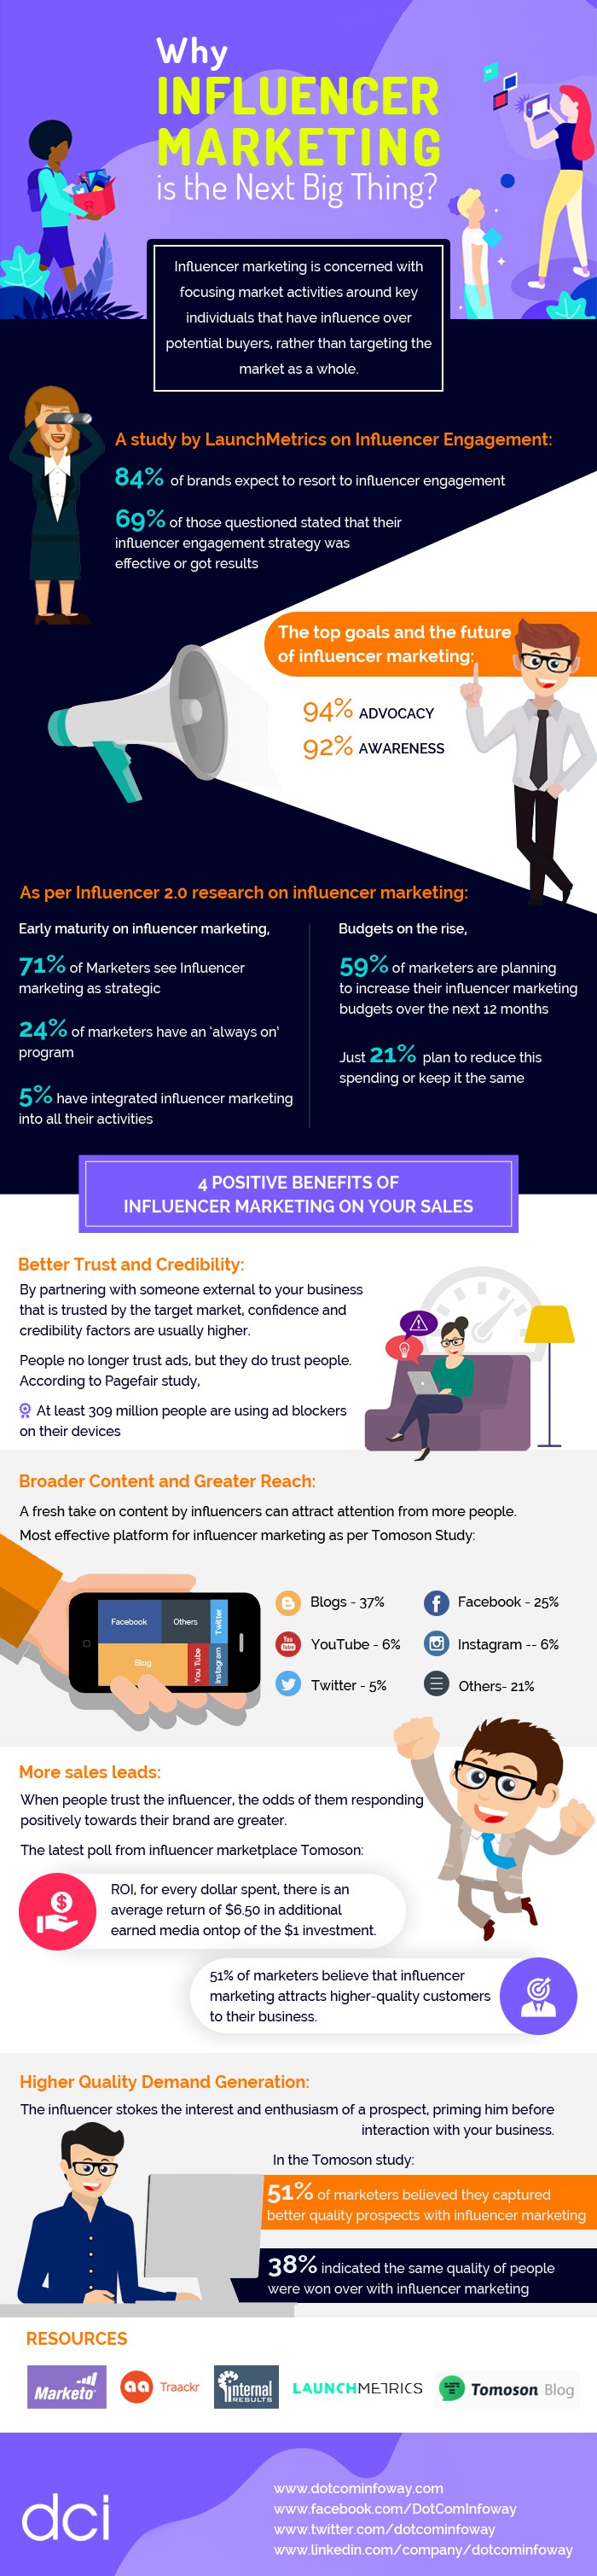 Influencer Marketing - Infographic